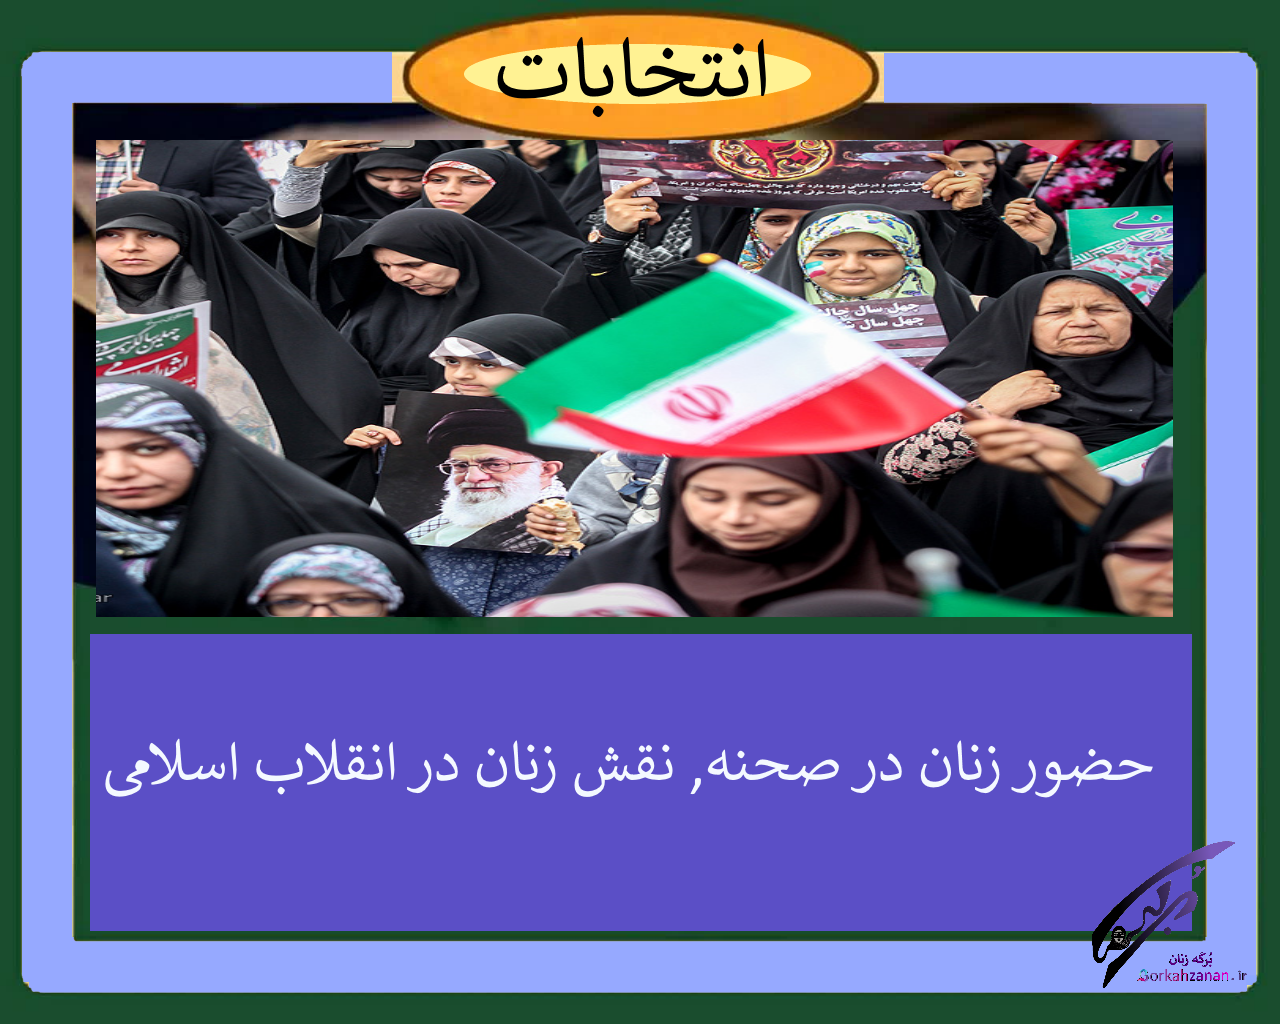 حضور زنان در صحنه, نقش زنان در انقلاب اسلامی